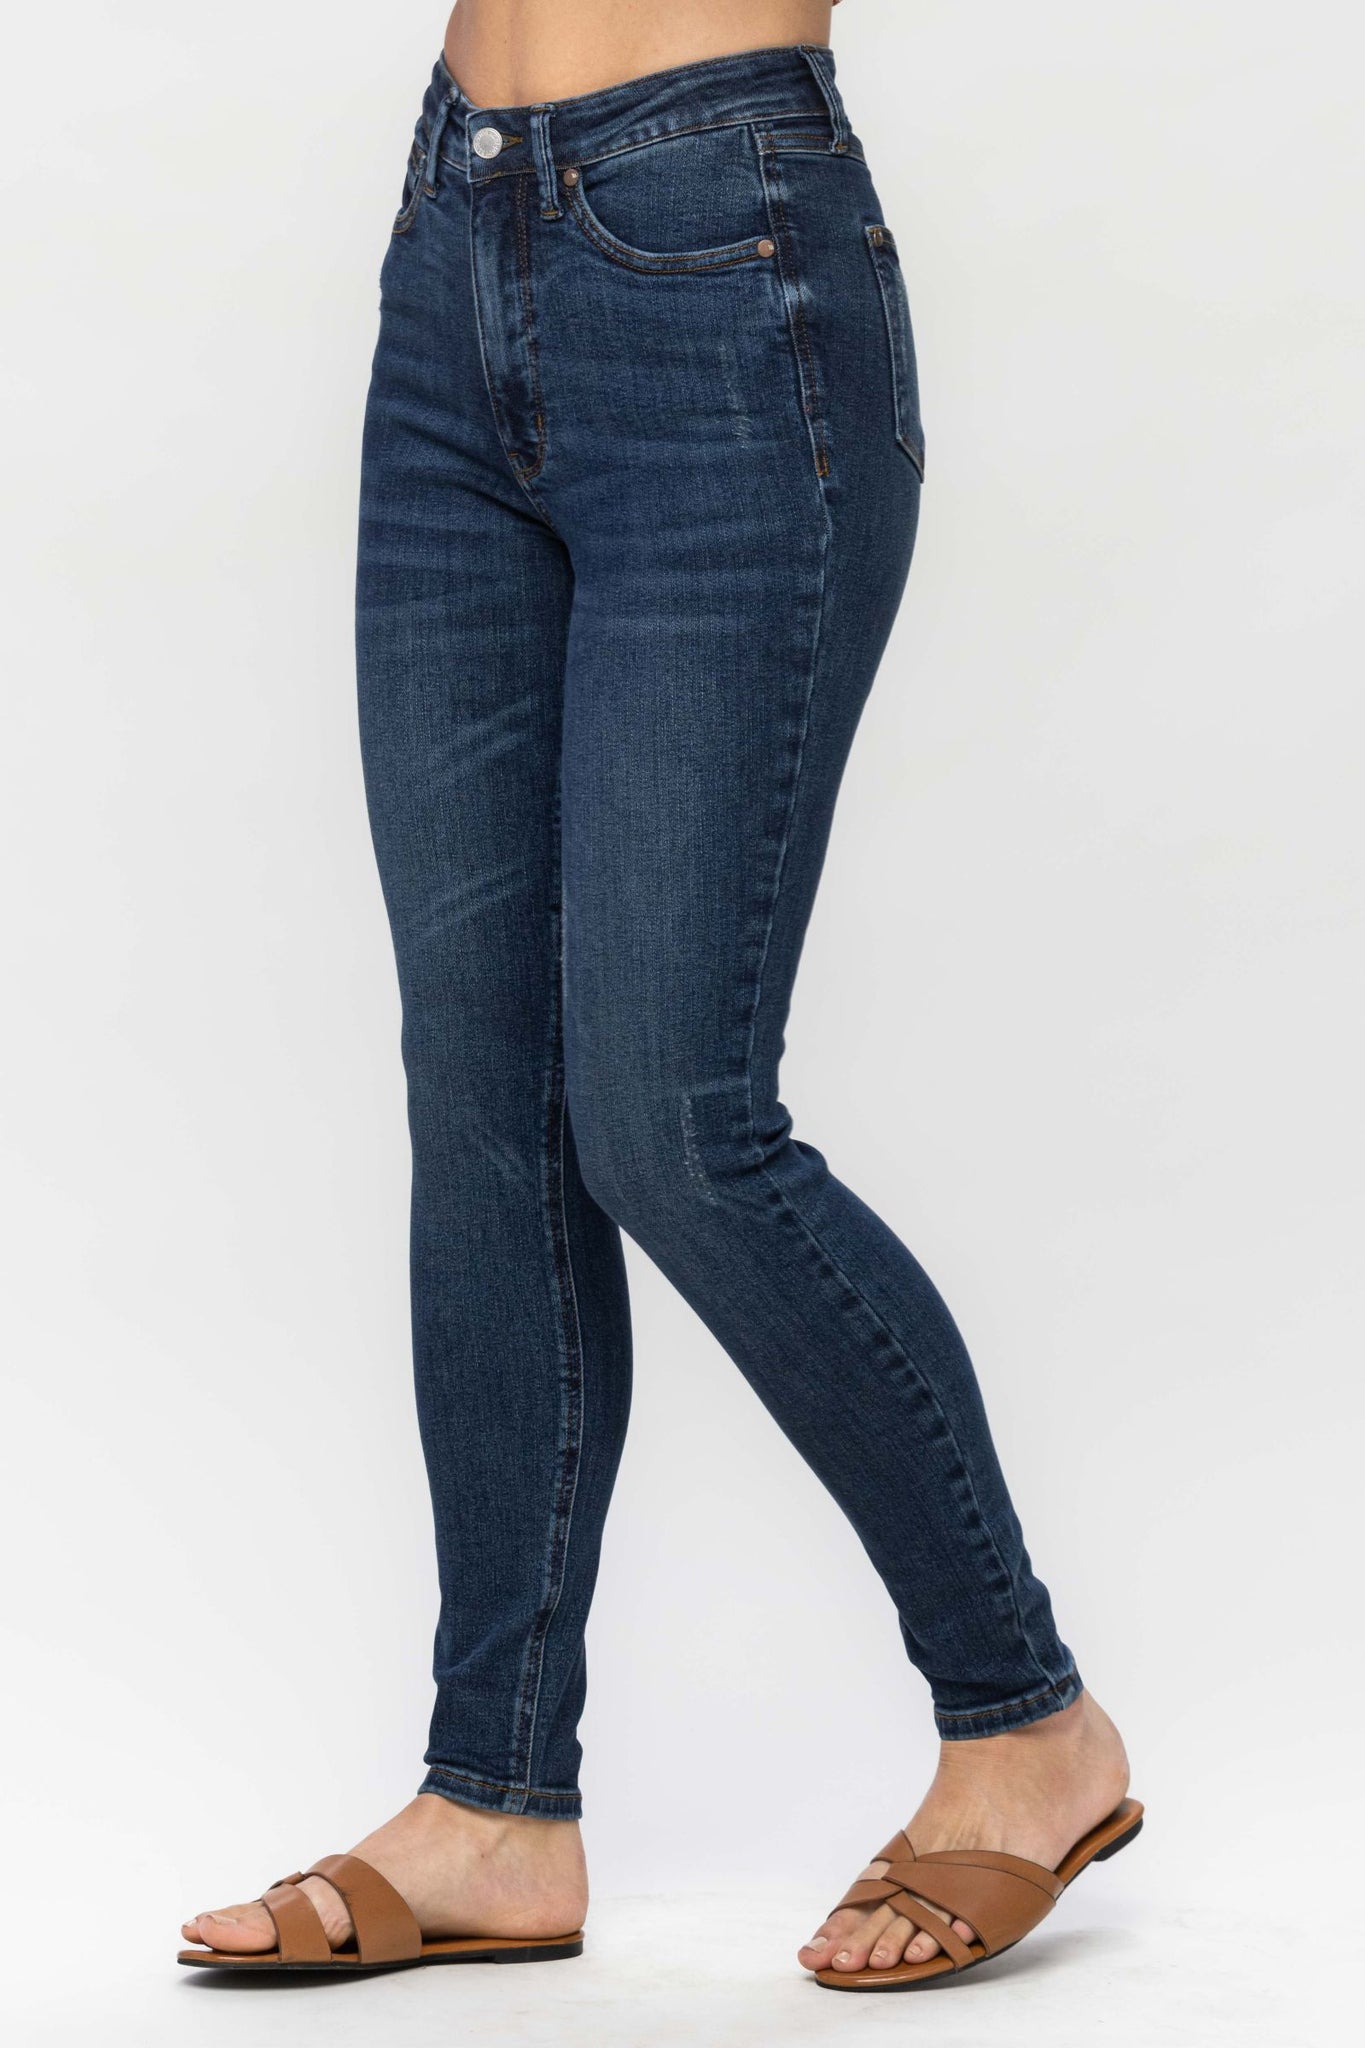 Judy Blue Pretty Woman Tummy Control Jeans, By Alexa Rae Boutique